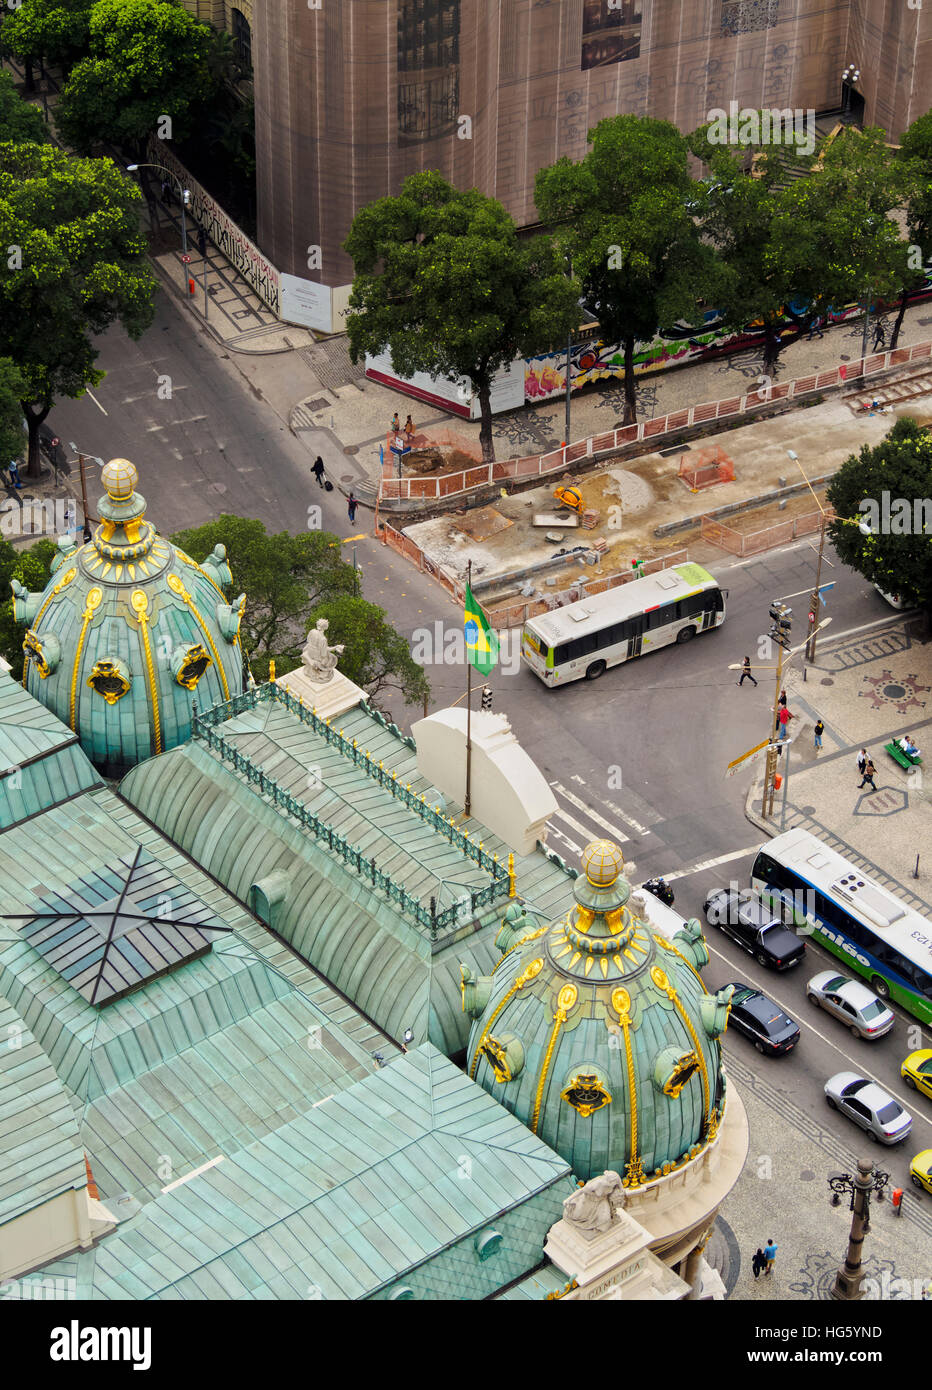 Brazil, City of Rio de Janeiro, Elevated view of the Theatro Municipal. Stock Photo